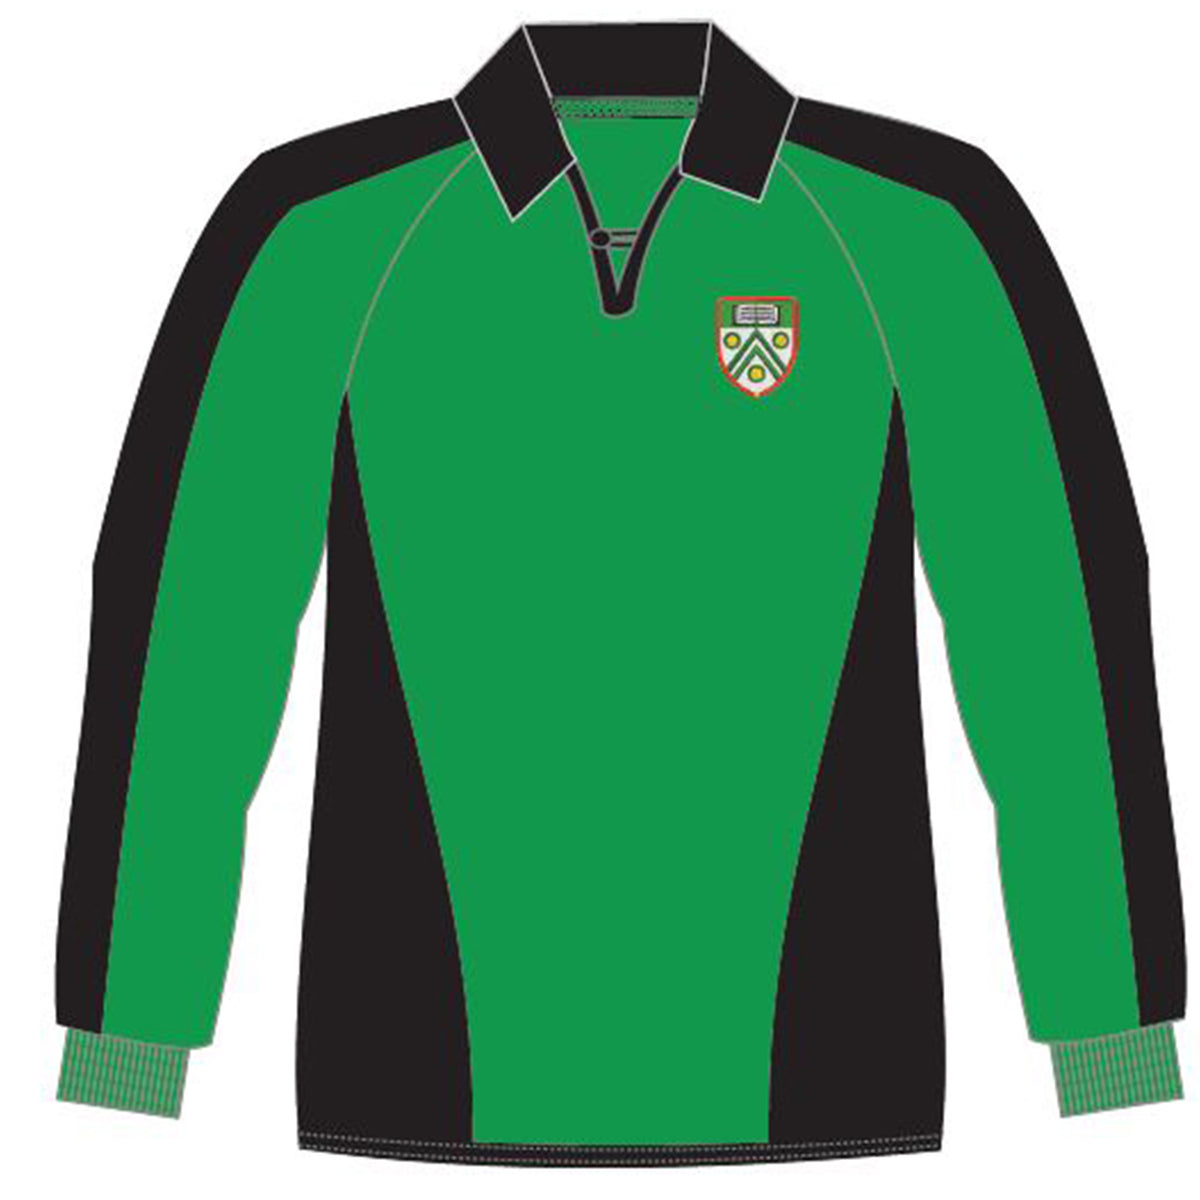 Langley Grammar School Rugby Jersey: Emerald/Black